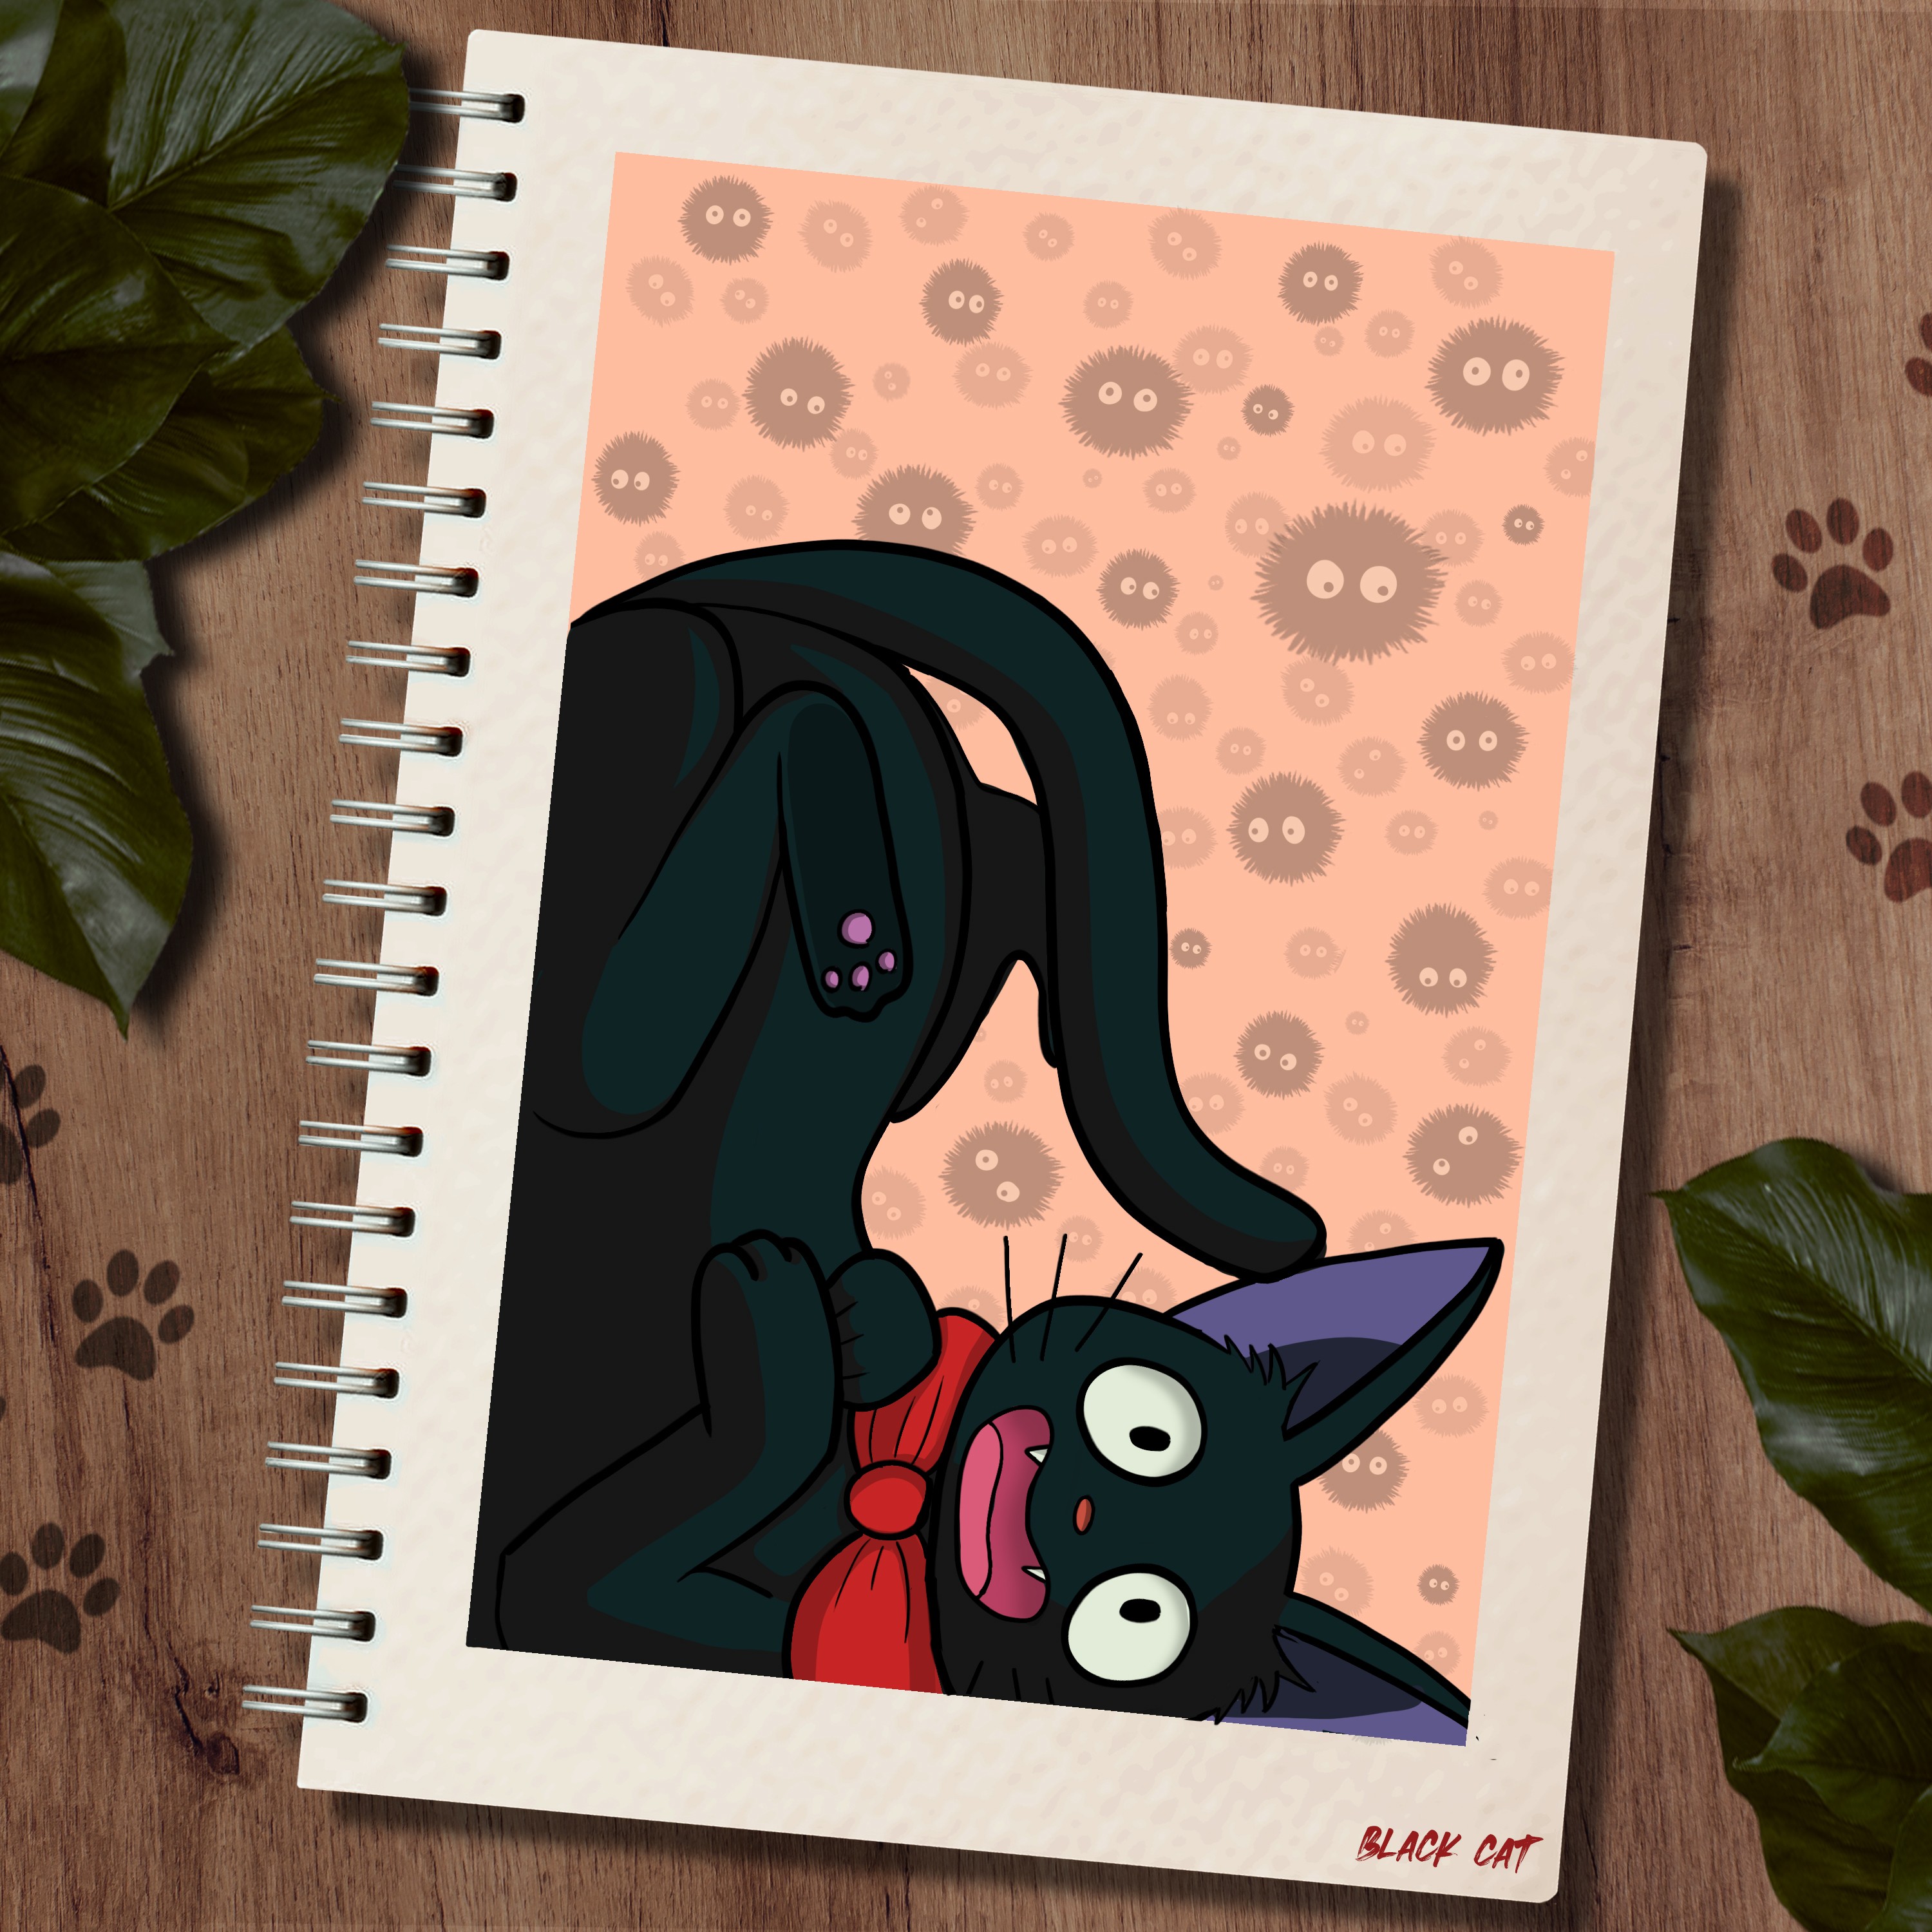 Black cat par Leam_art